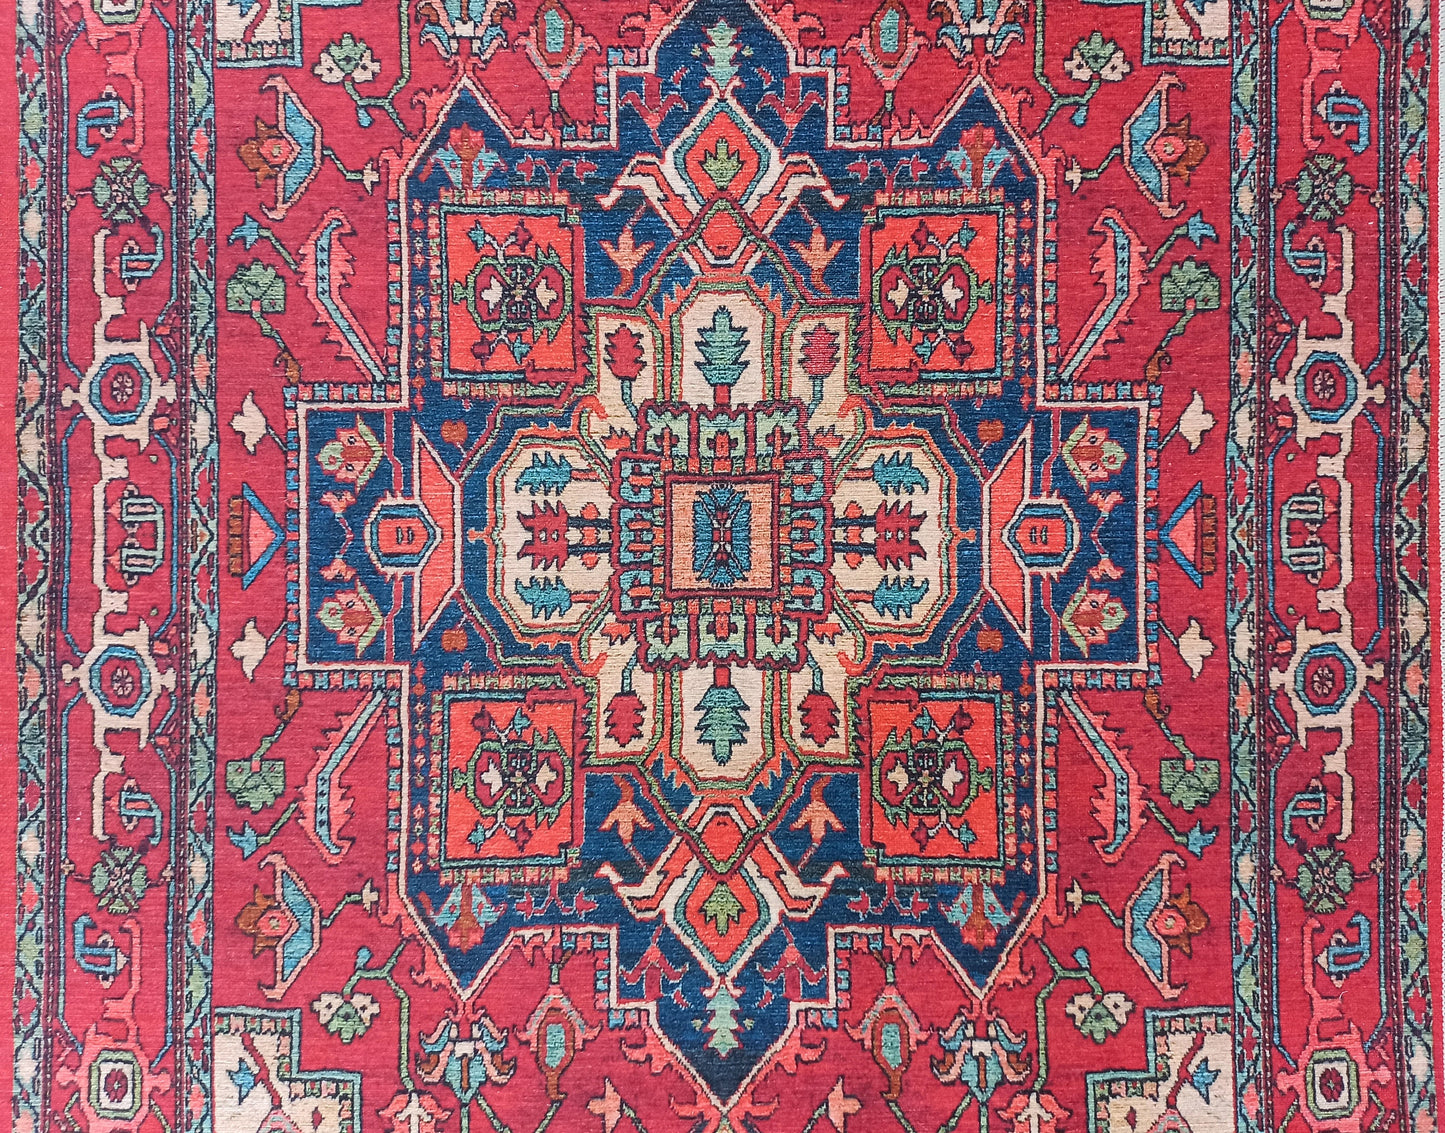 ALIN Runner | Persian Heriz Runner, Red Beige Vintage Distressed look Runners, Bohemian Home decor, Mid-century Design Carpet, Fame Rugs, Teppich